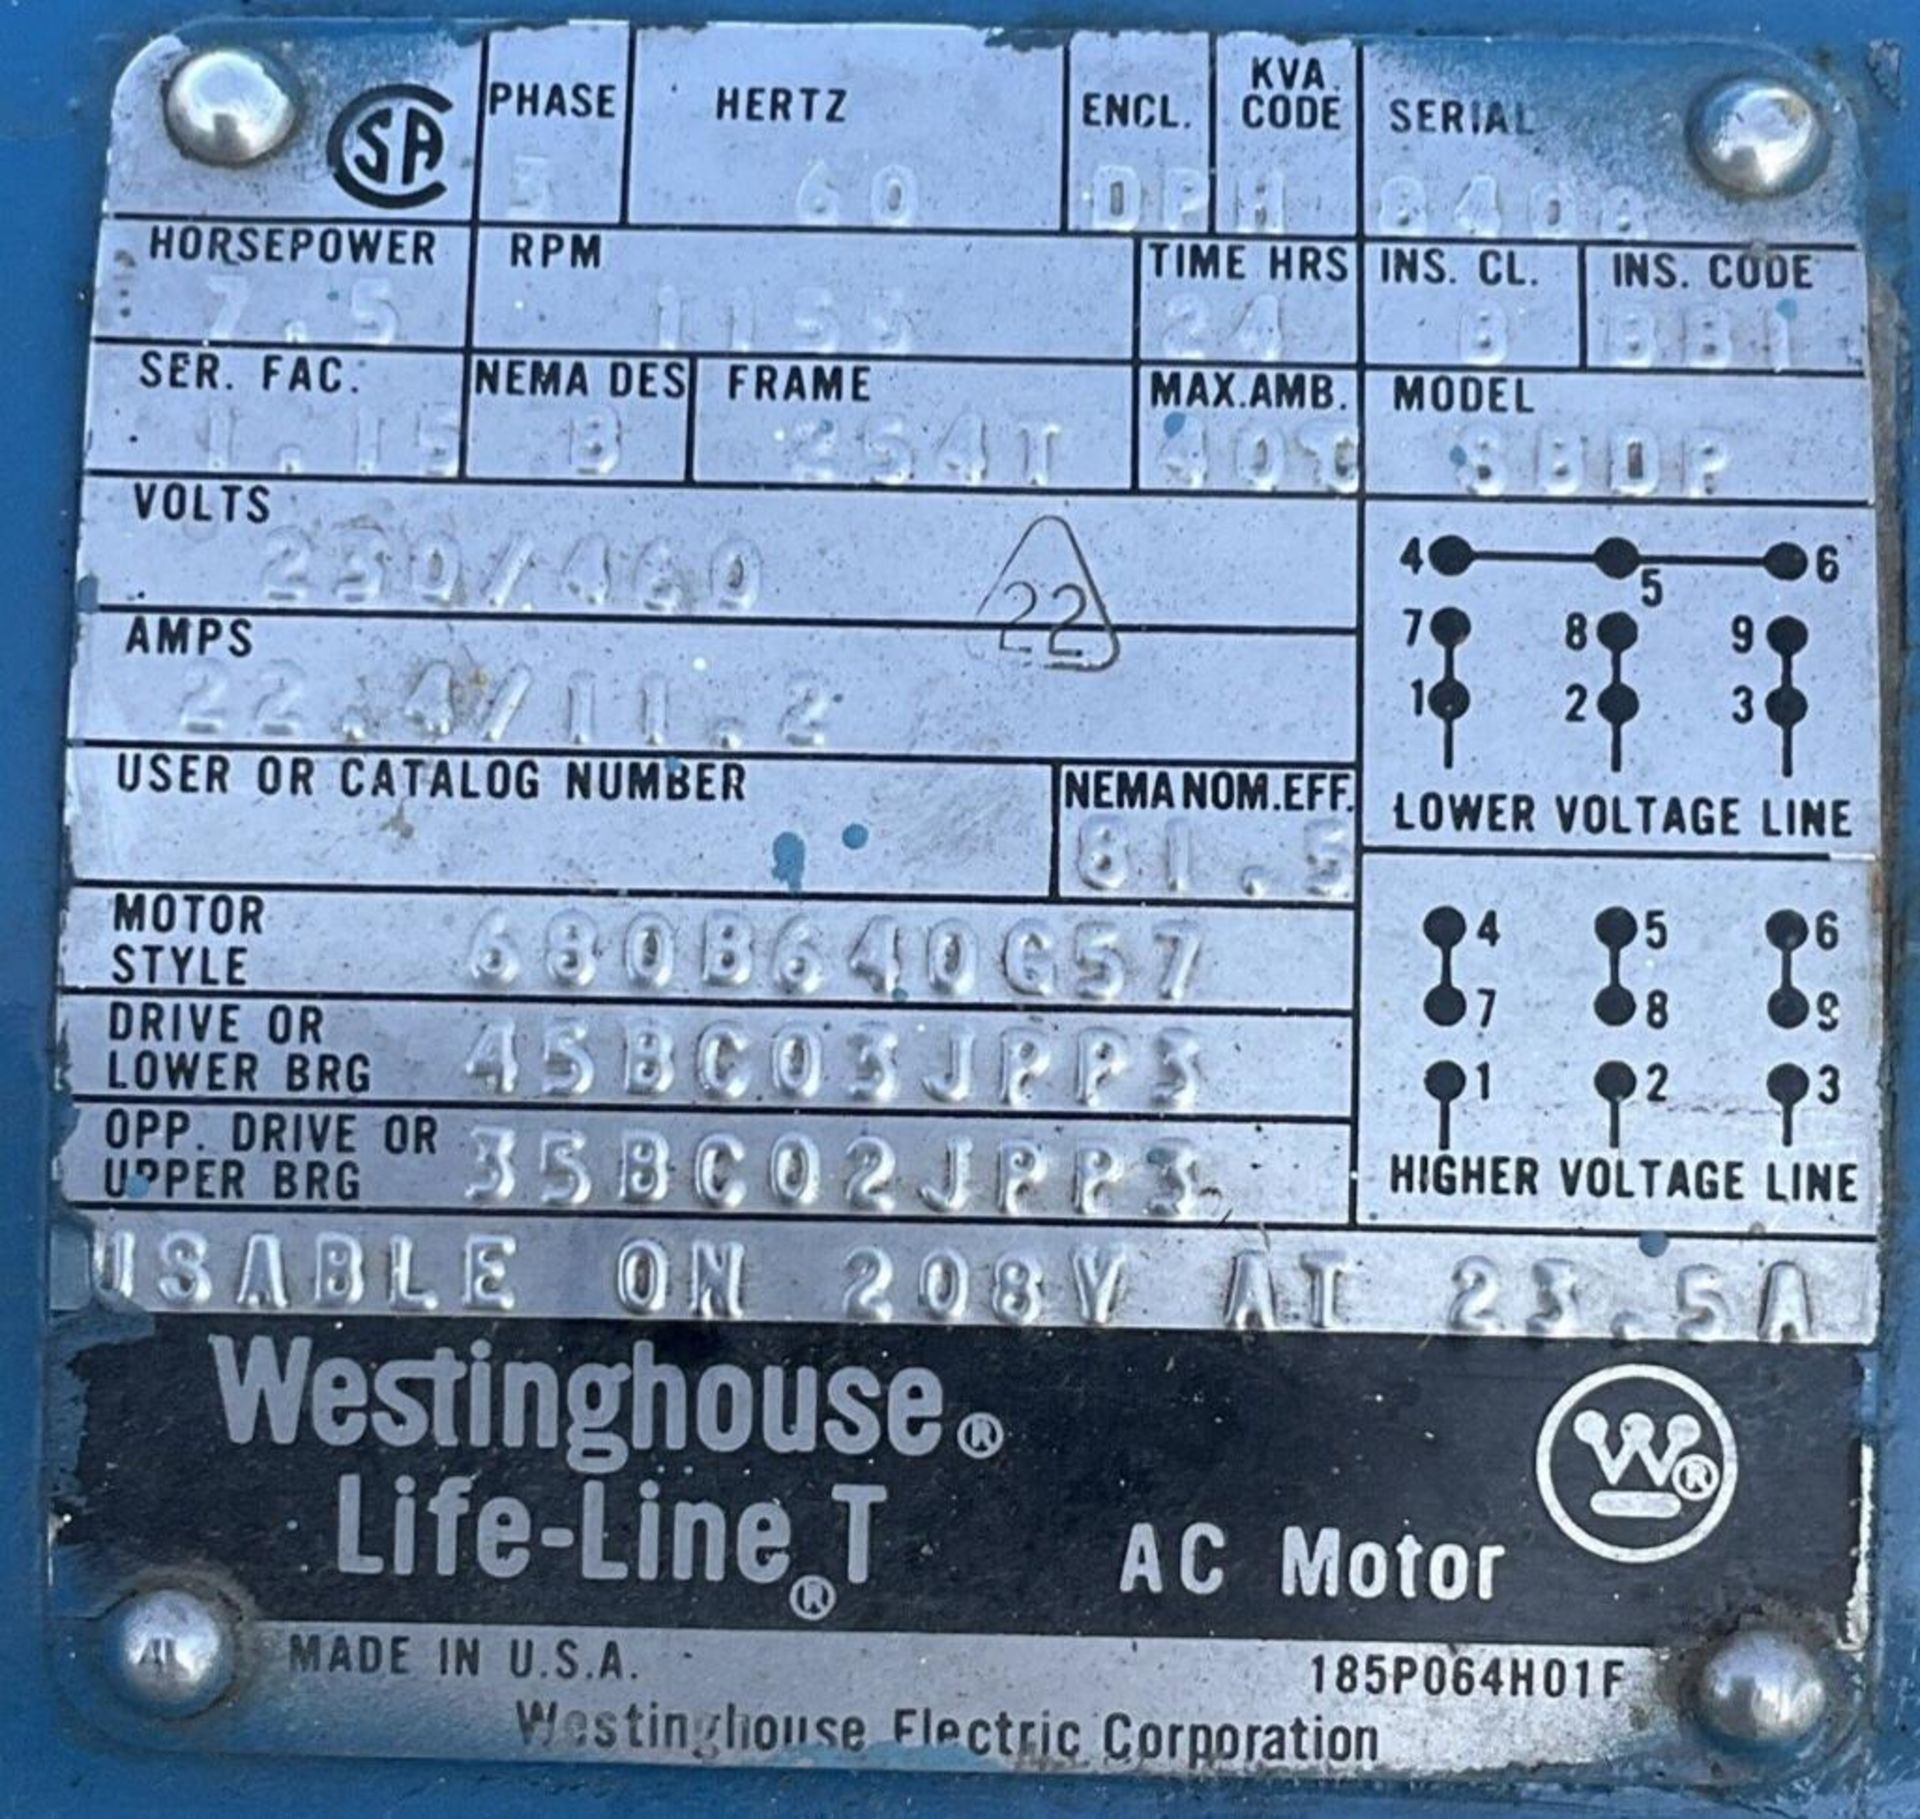 WESTINGHOUSE 880P 680B640G57 LIFE-LINE T AC MOTOR 3 PH 60HZ 7.5HP 460V 1156 RPM - Image 6 of 9